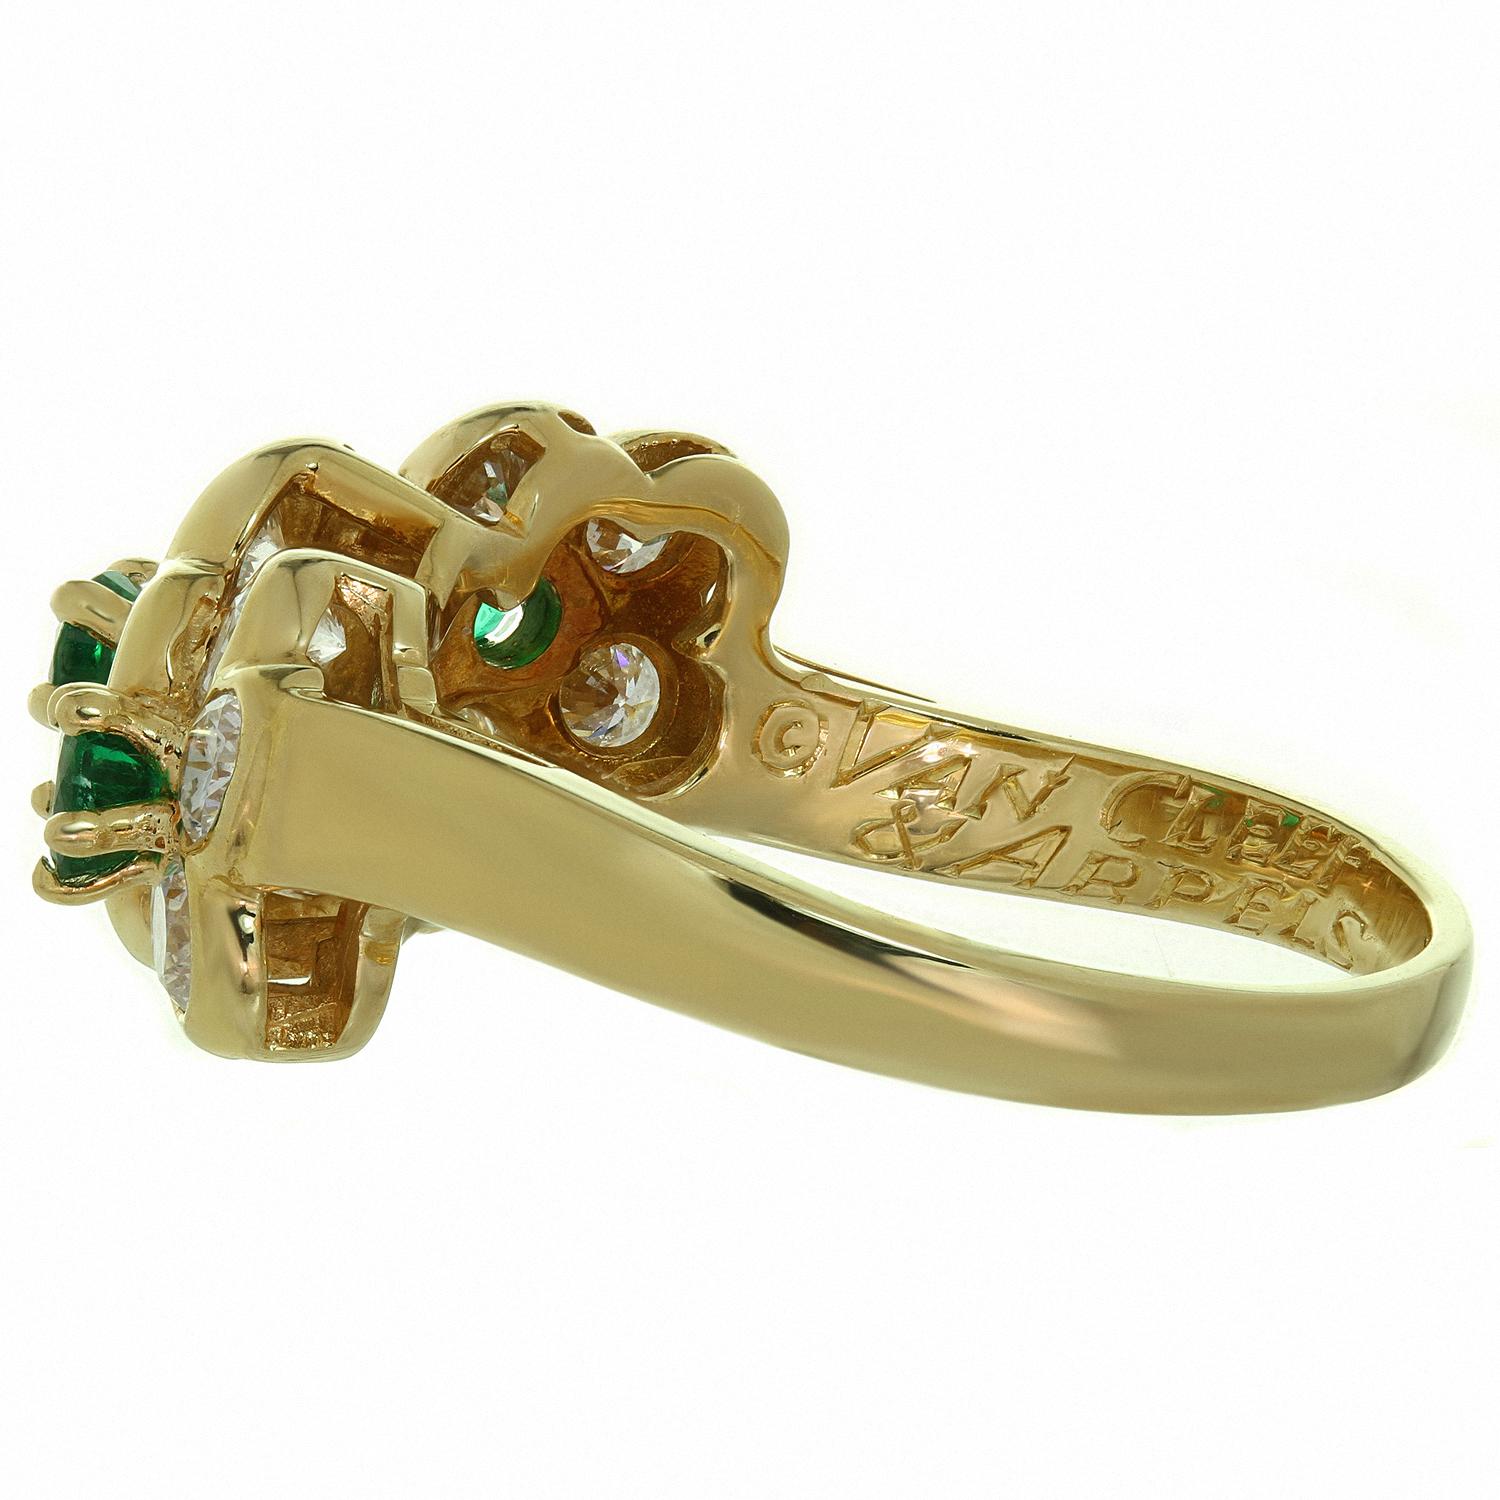 Brilliant Cut Van Cleef & Arpels Fleurette Emerald Diamond Flower Yellow Gold Ring For Sale